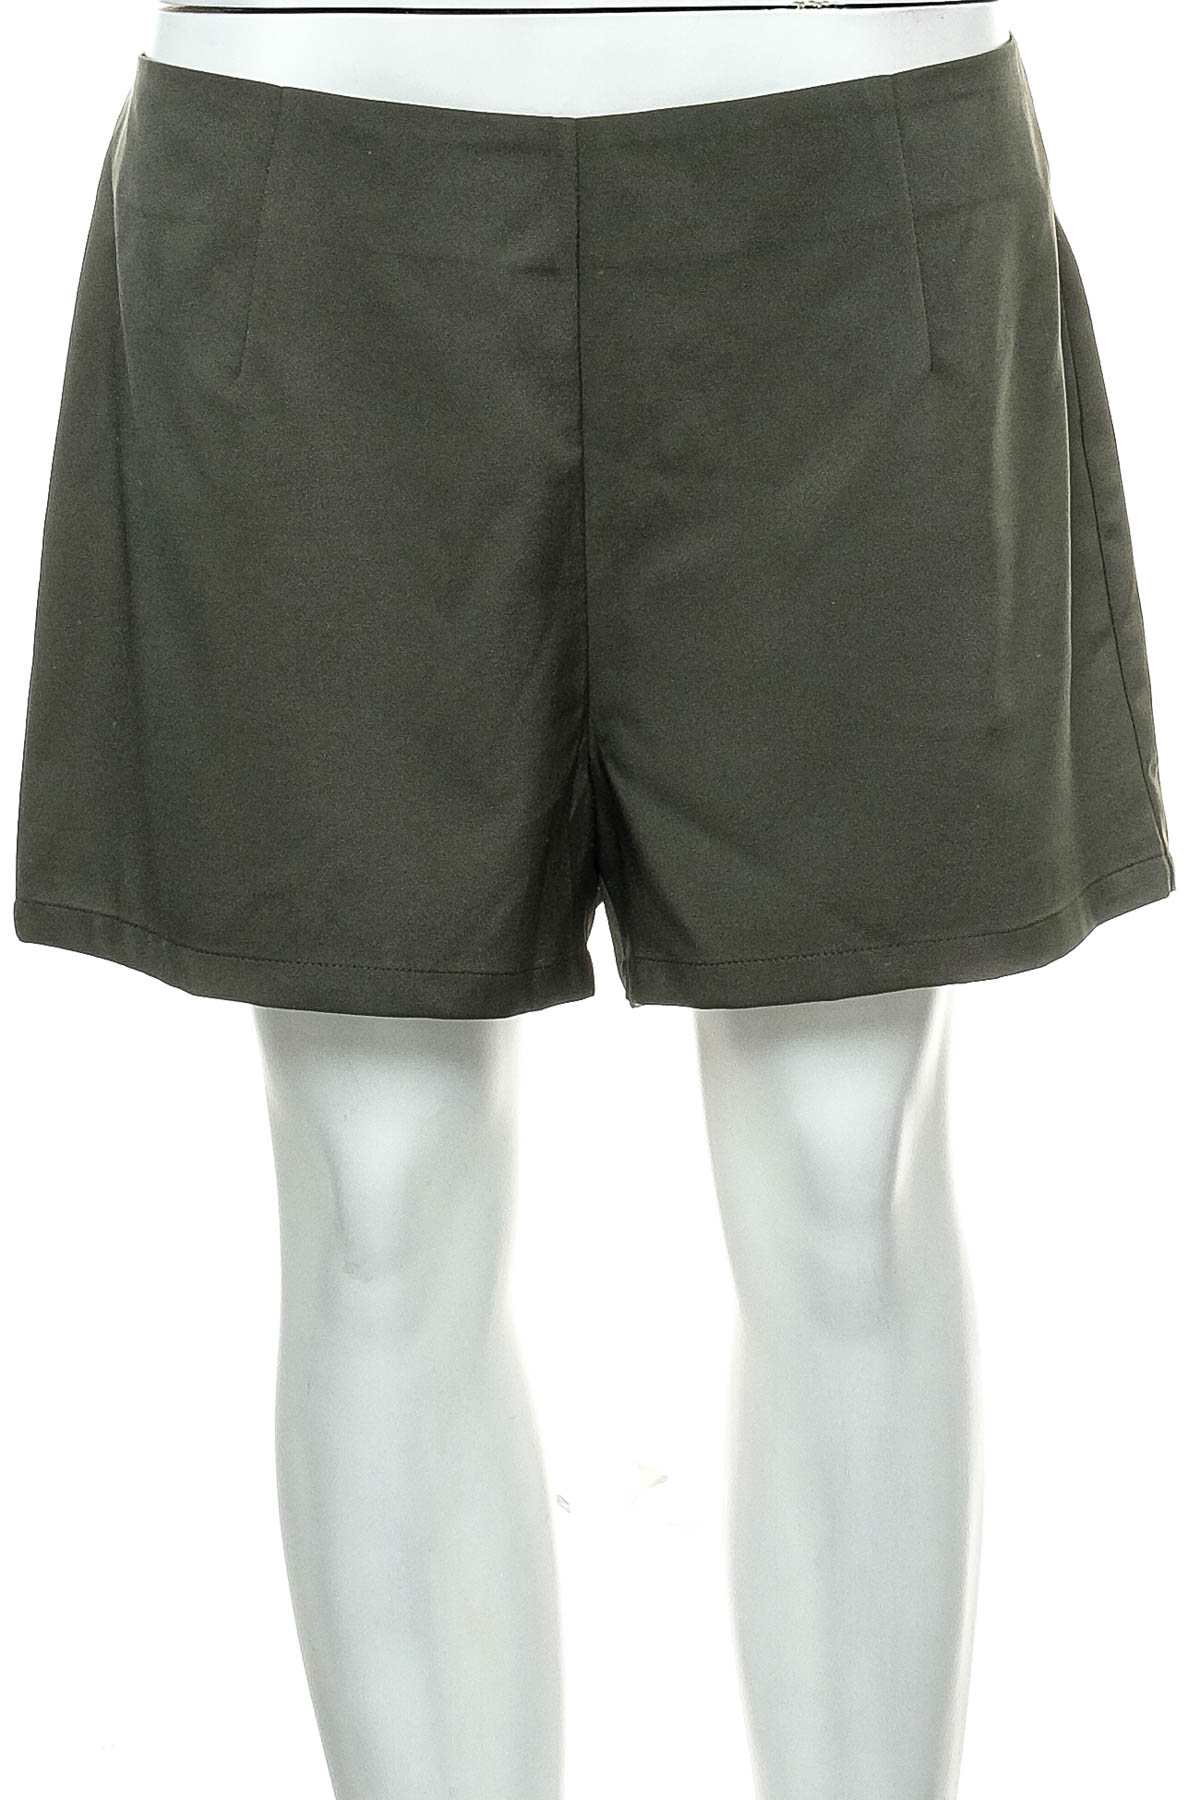 Female shorts - Love, Bonito - 0